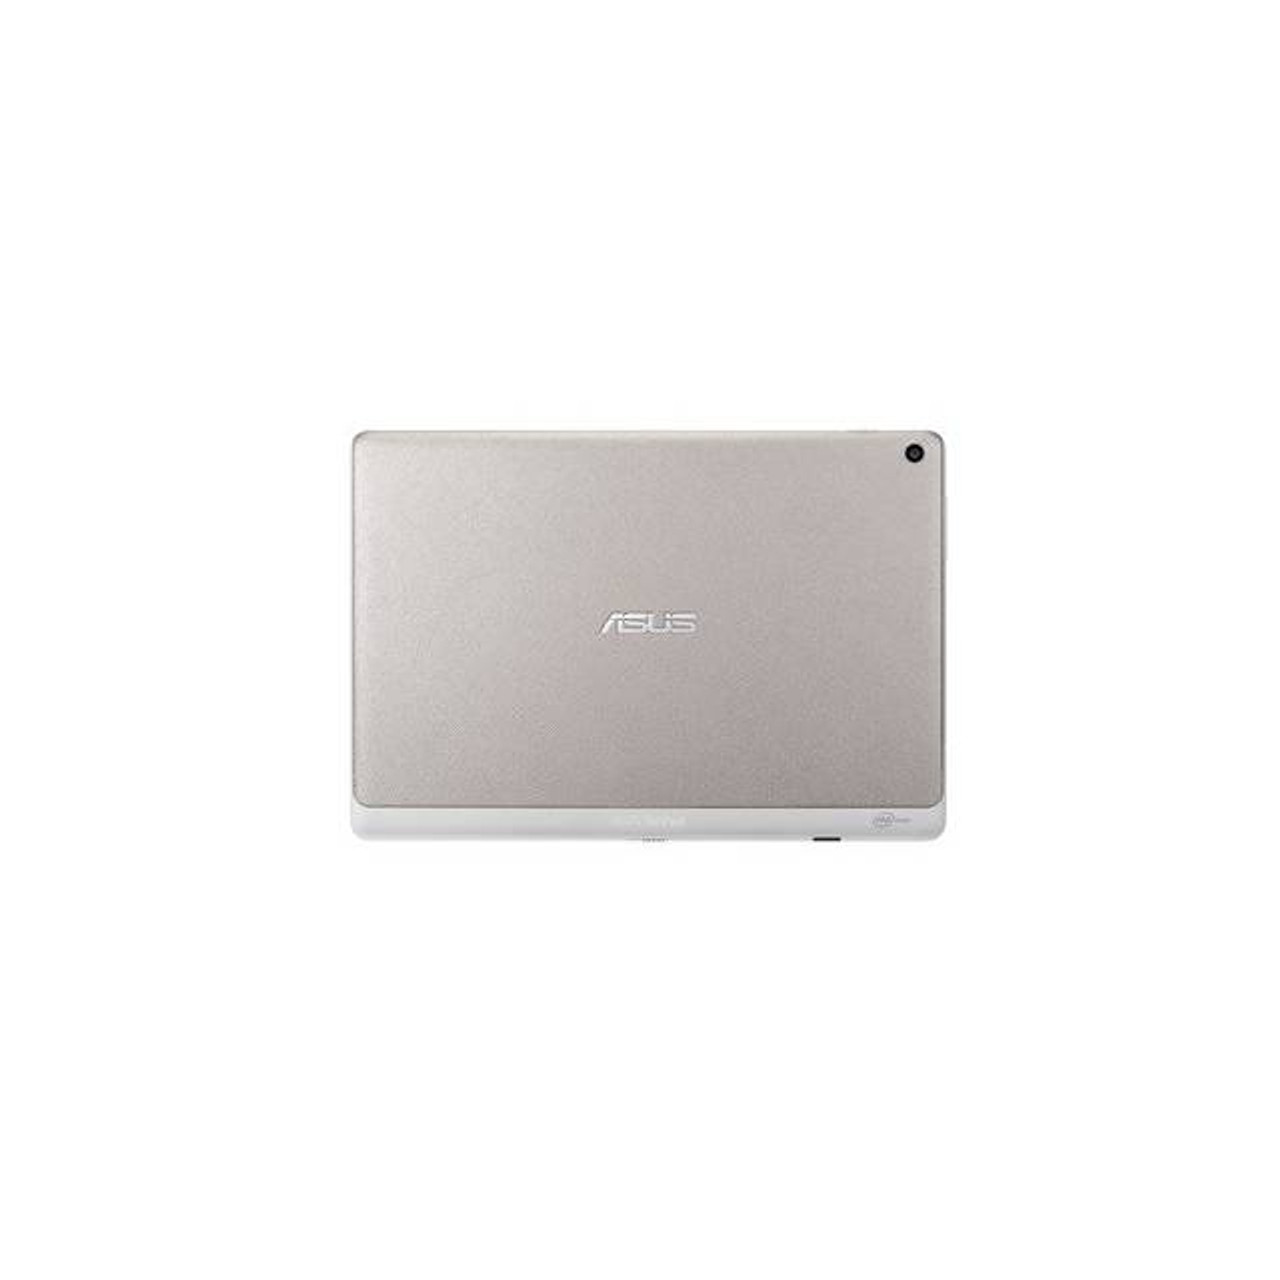 ASUS ZenPad Z300C-A1-MT 10.1 inch Intel Atom x3-C3200 1.2GHz/ 2GB LPDDR3/ 16GB eMMC/ Android 5.0 Lollipop Tablet (Aurora Metallic)